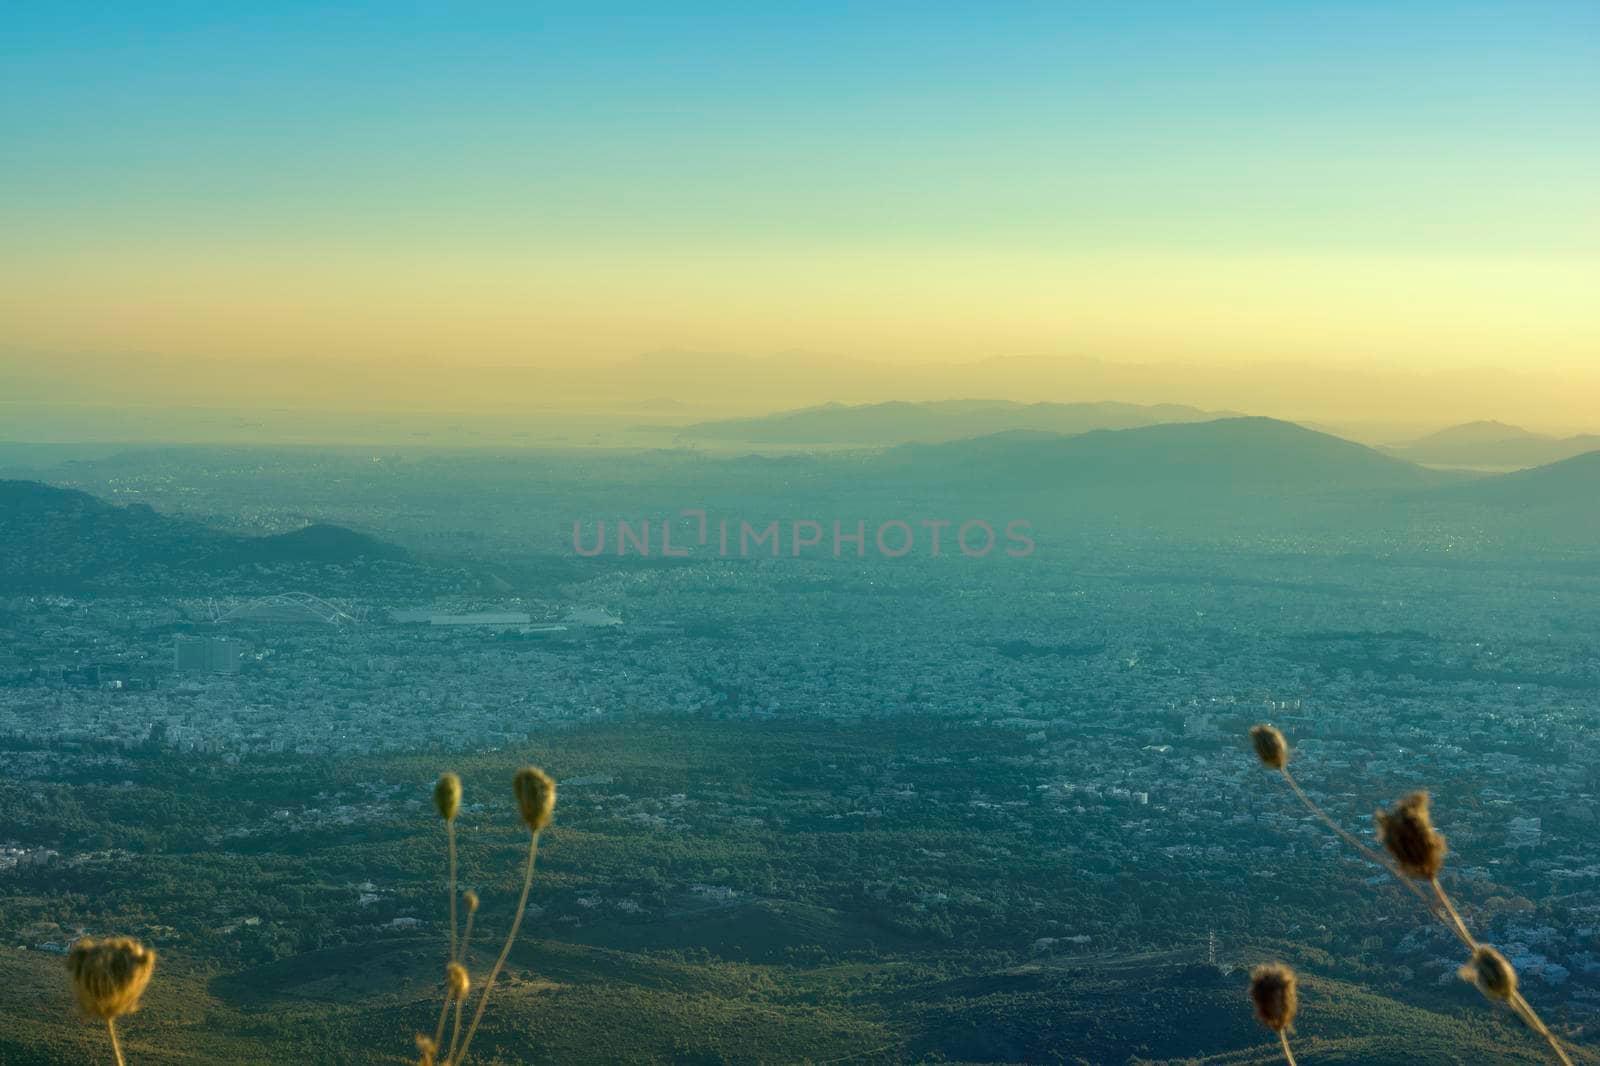 Panoramic view over Athens, taken shot from Penteli mountain at sunset.